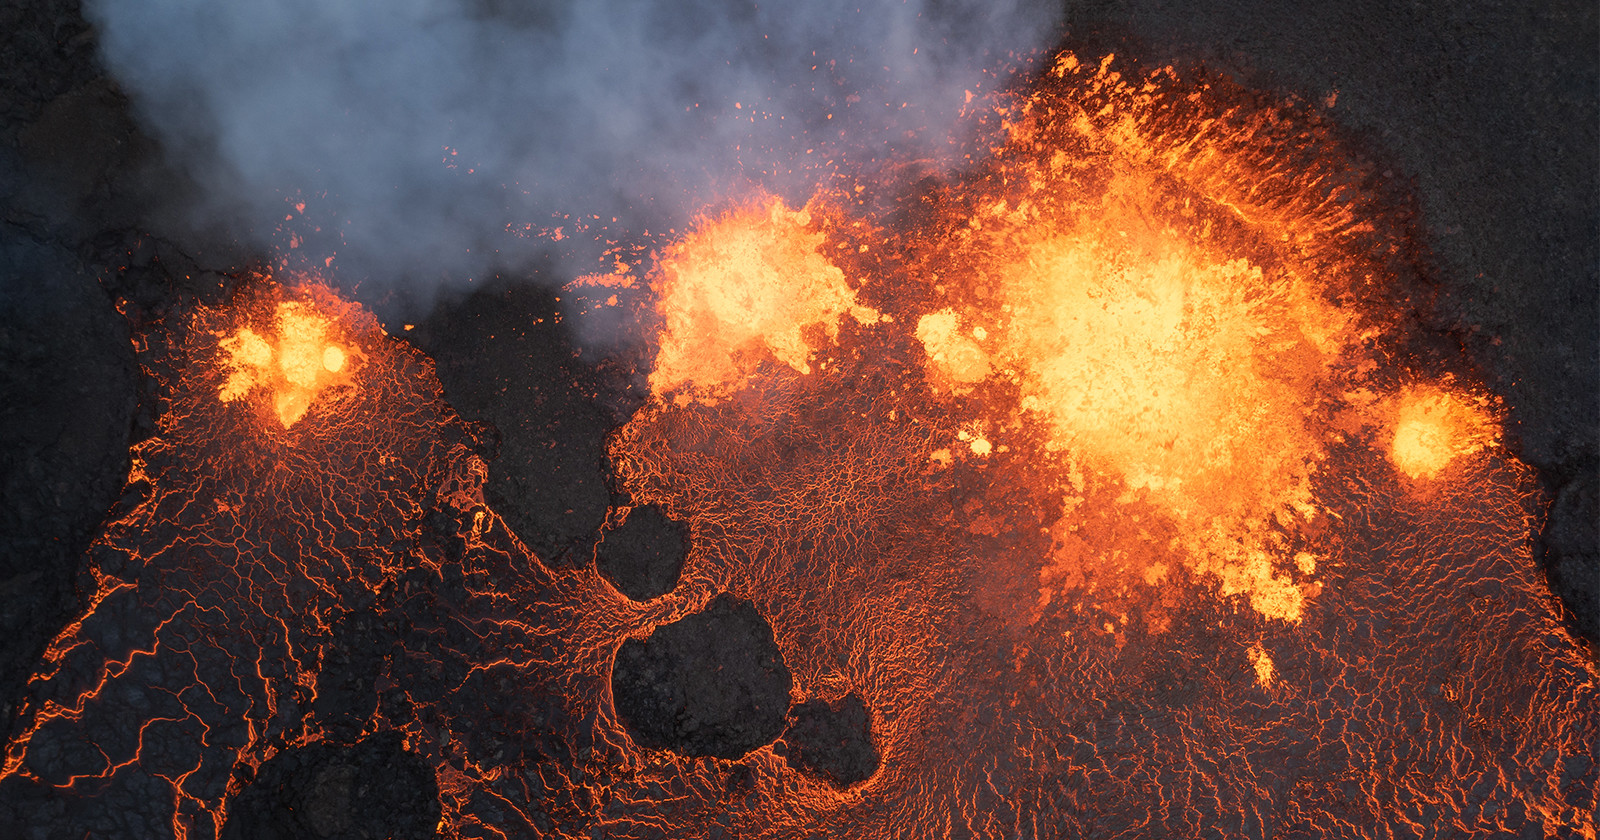 Capturing Serene Photos of Icelands Volcanic Lava Flows